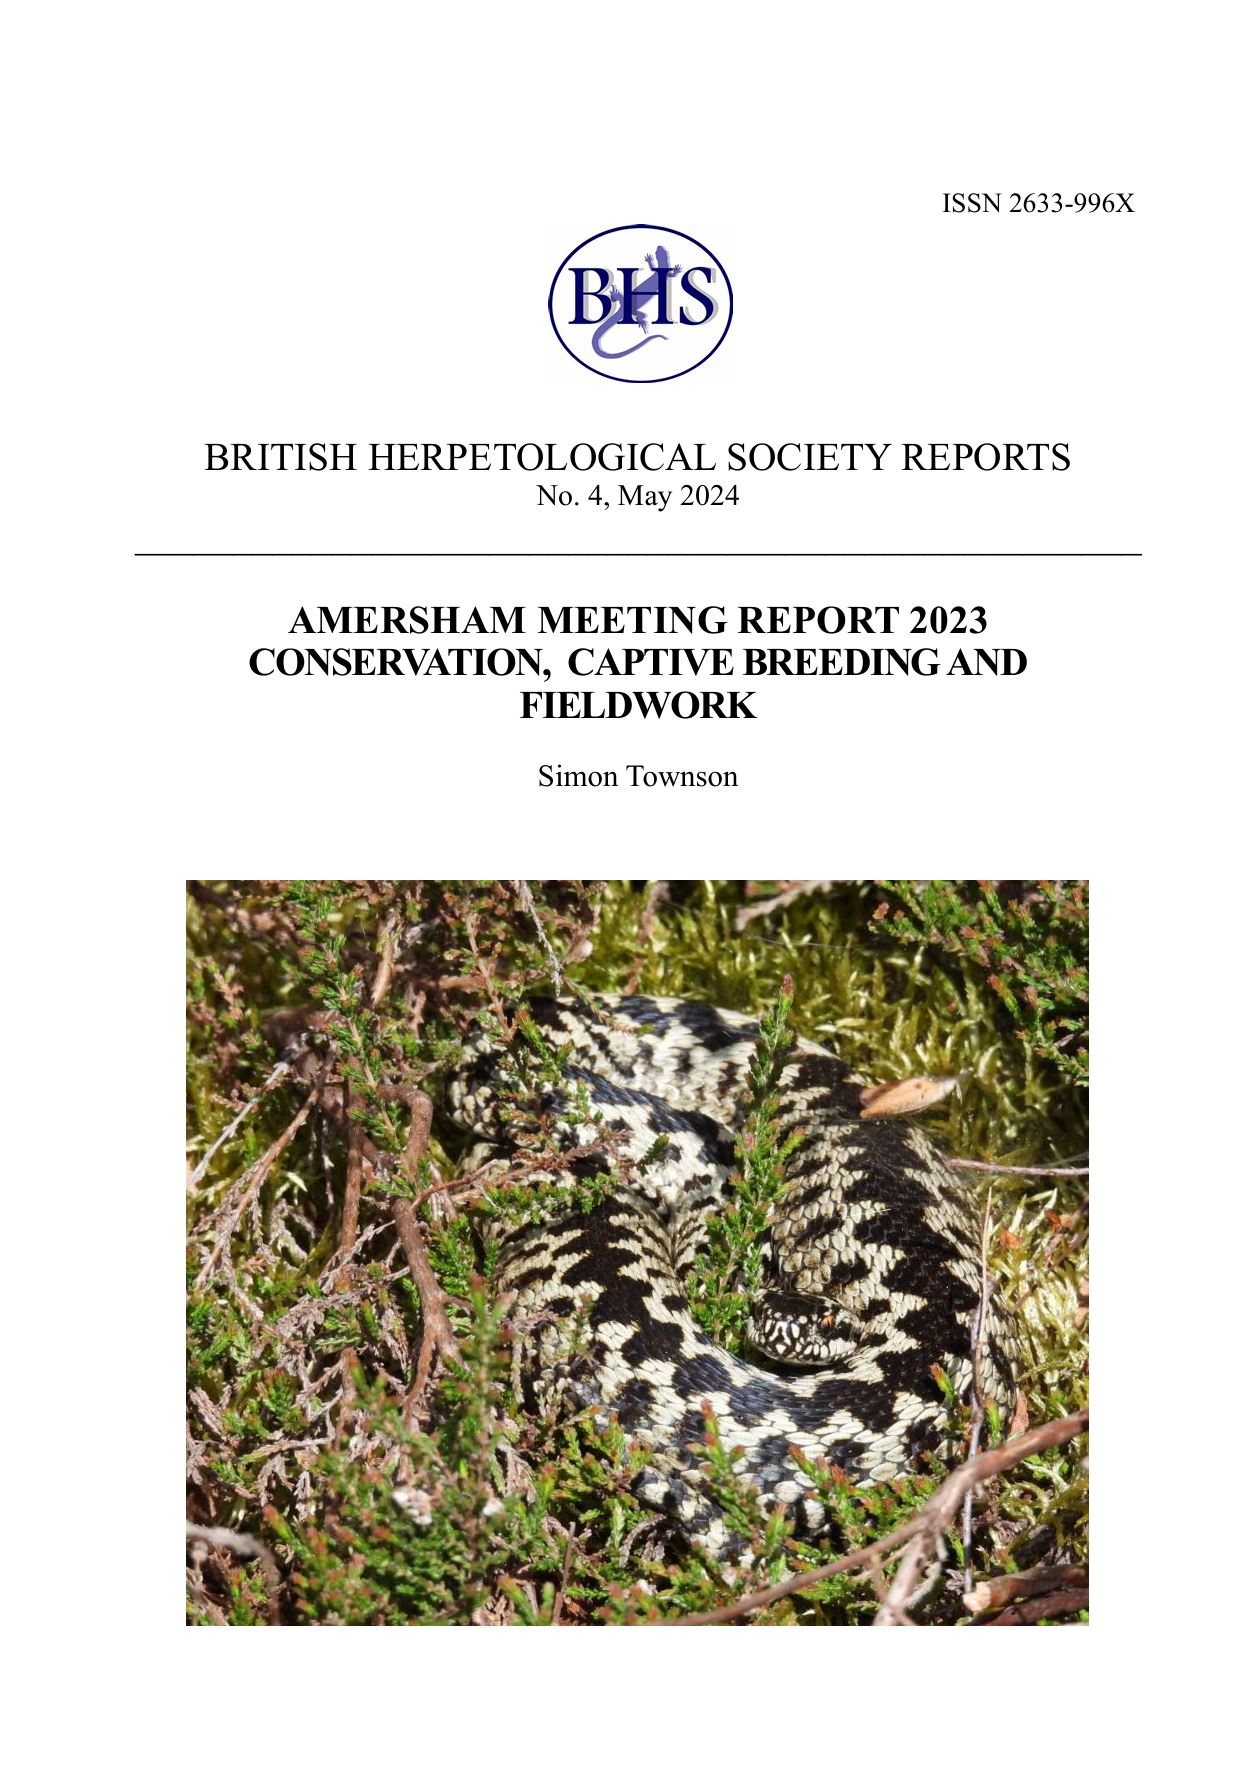 Amersham Meeting Report 2023 - conservation, captive breeding and fieldwork